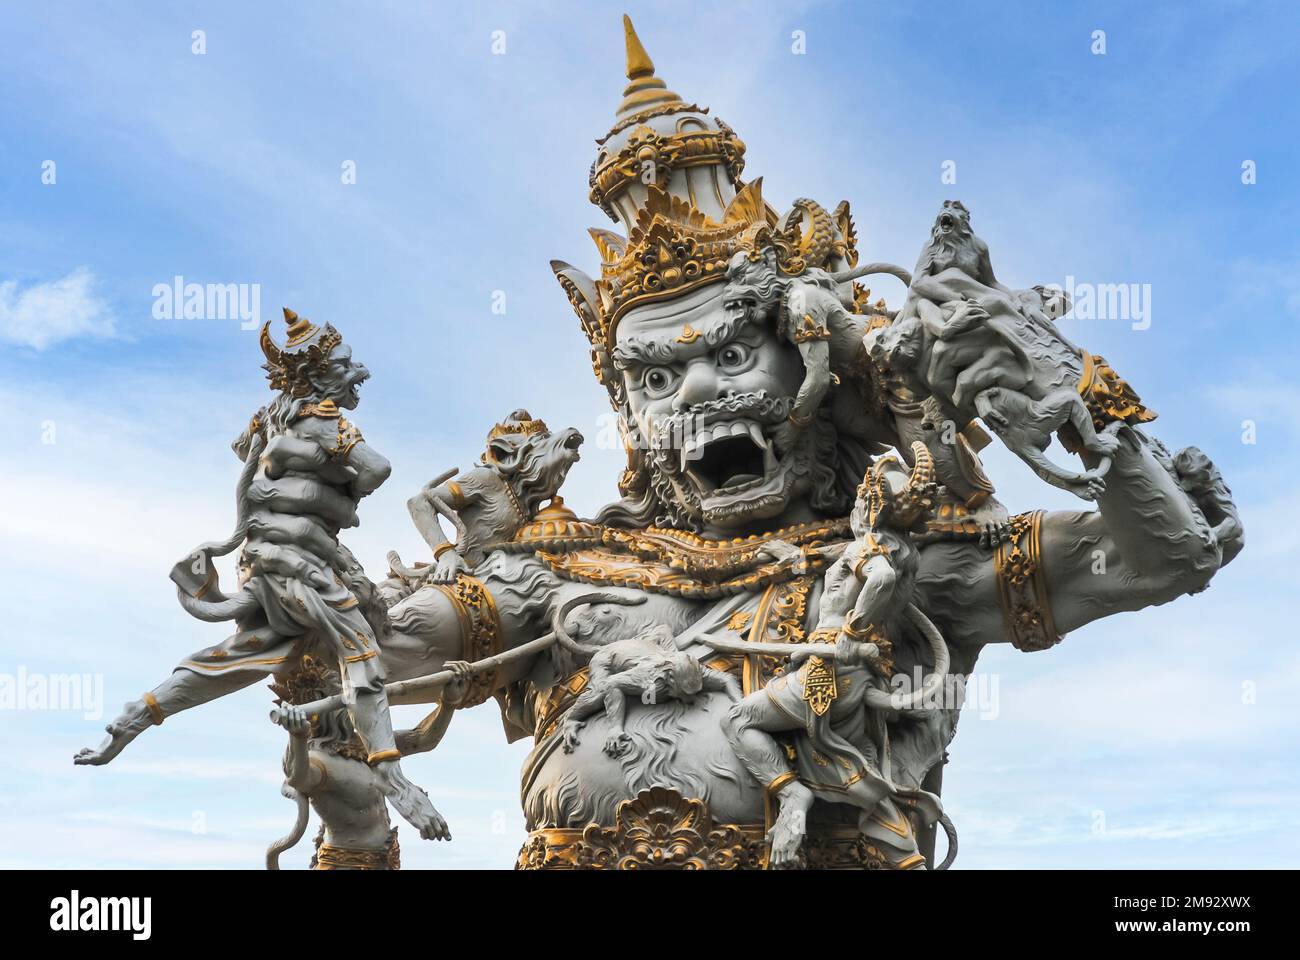 Kumbakarna Laga Statue im Botanischen Garten in Bali, Indonesien Stockfoto